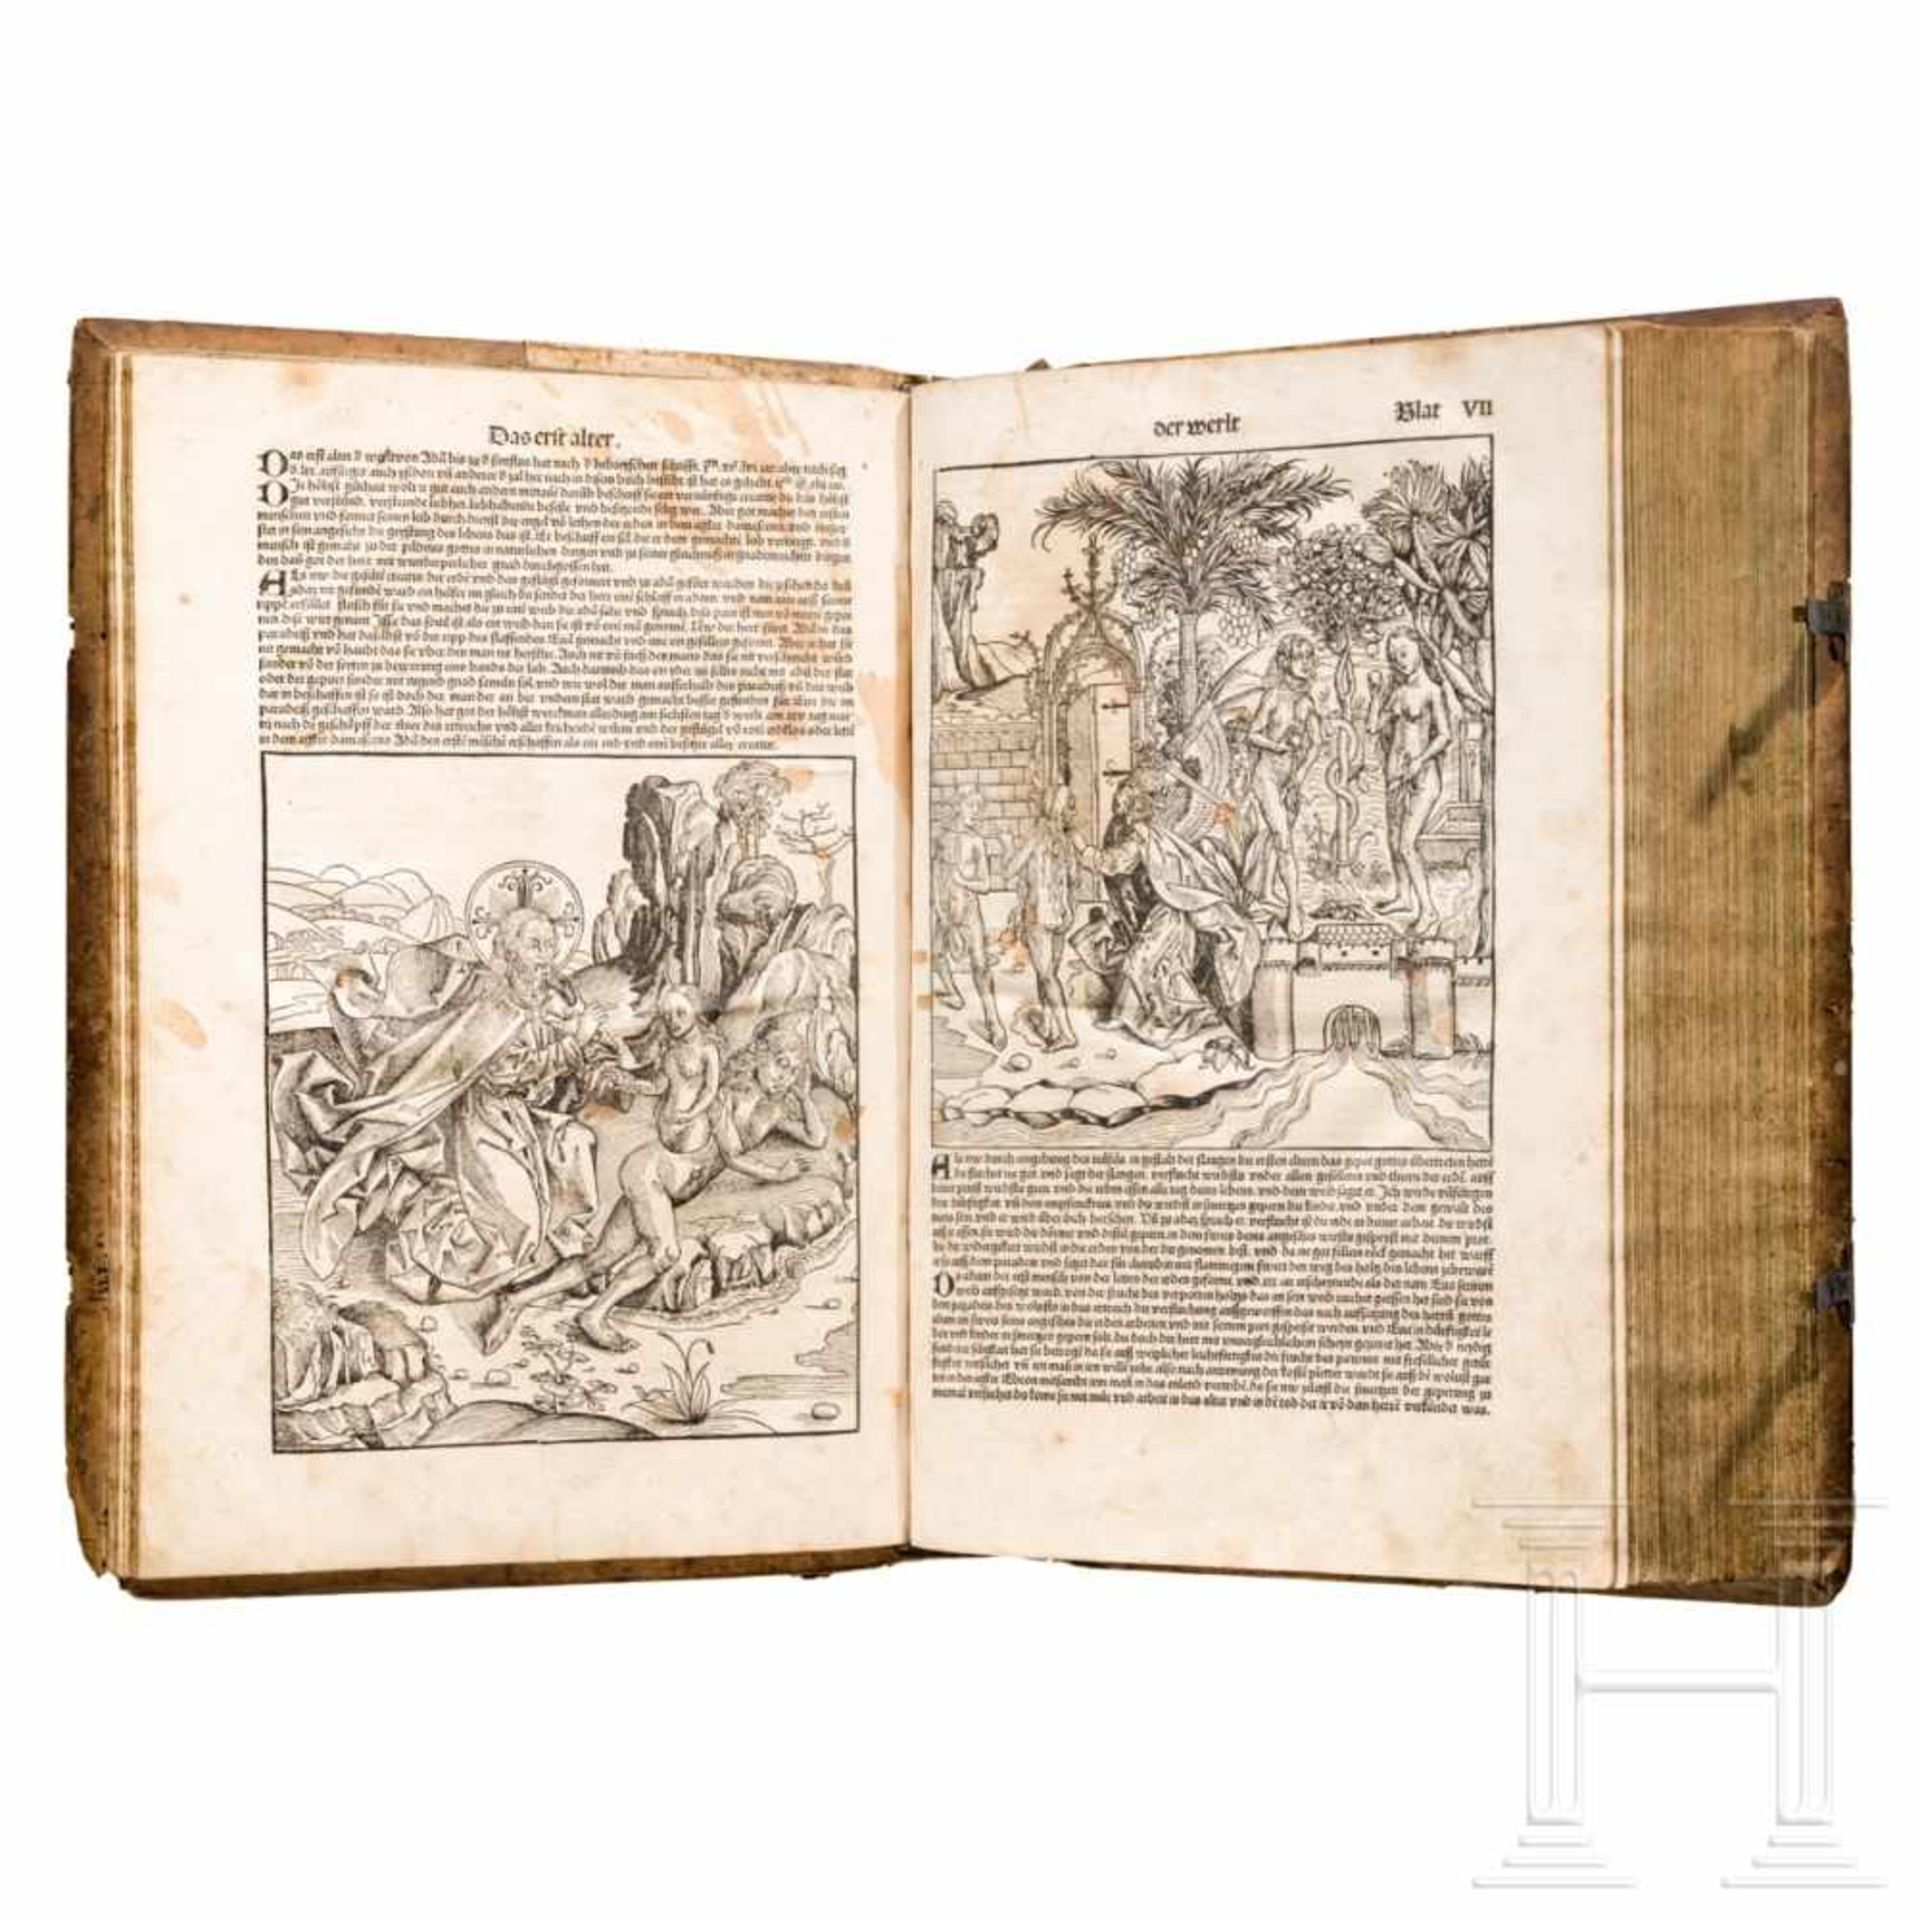 Hartmann Schedel, Das Buch der Chroniken, Nürnberg, A. Koberger, 1493 - Image 41 of 51